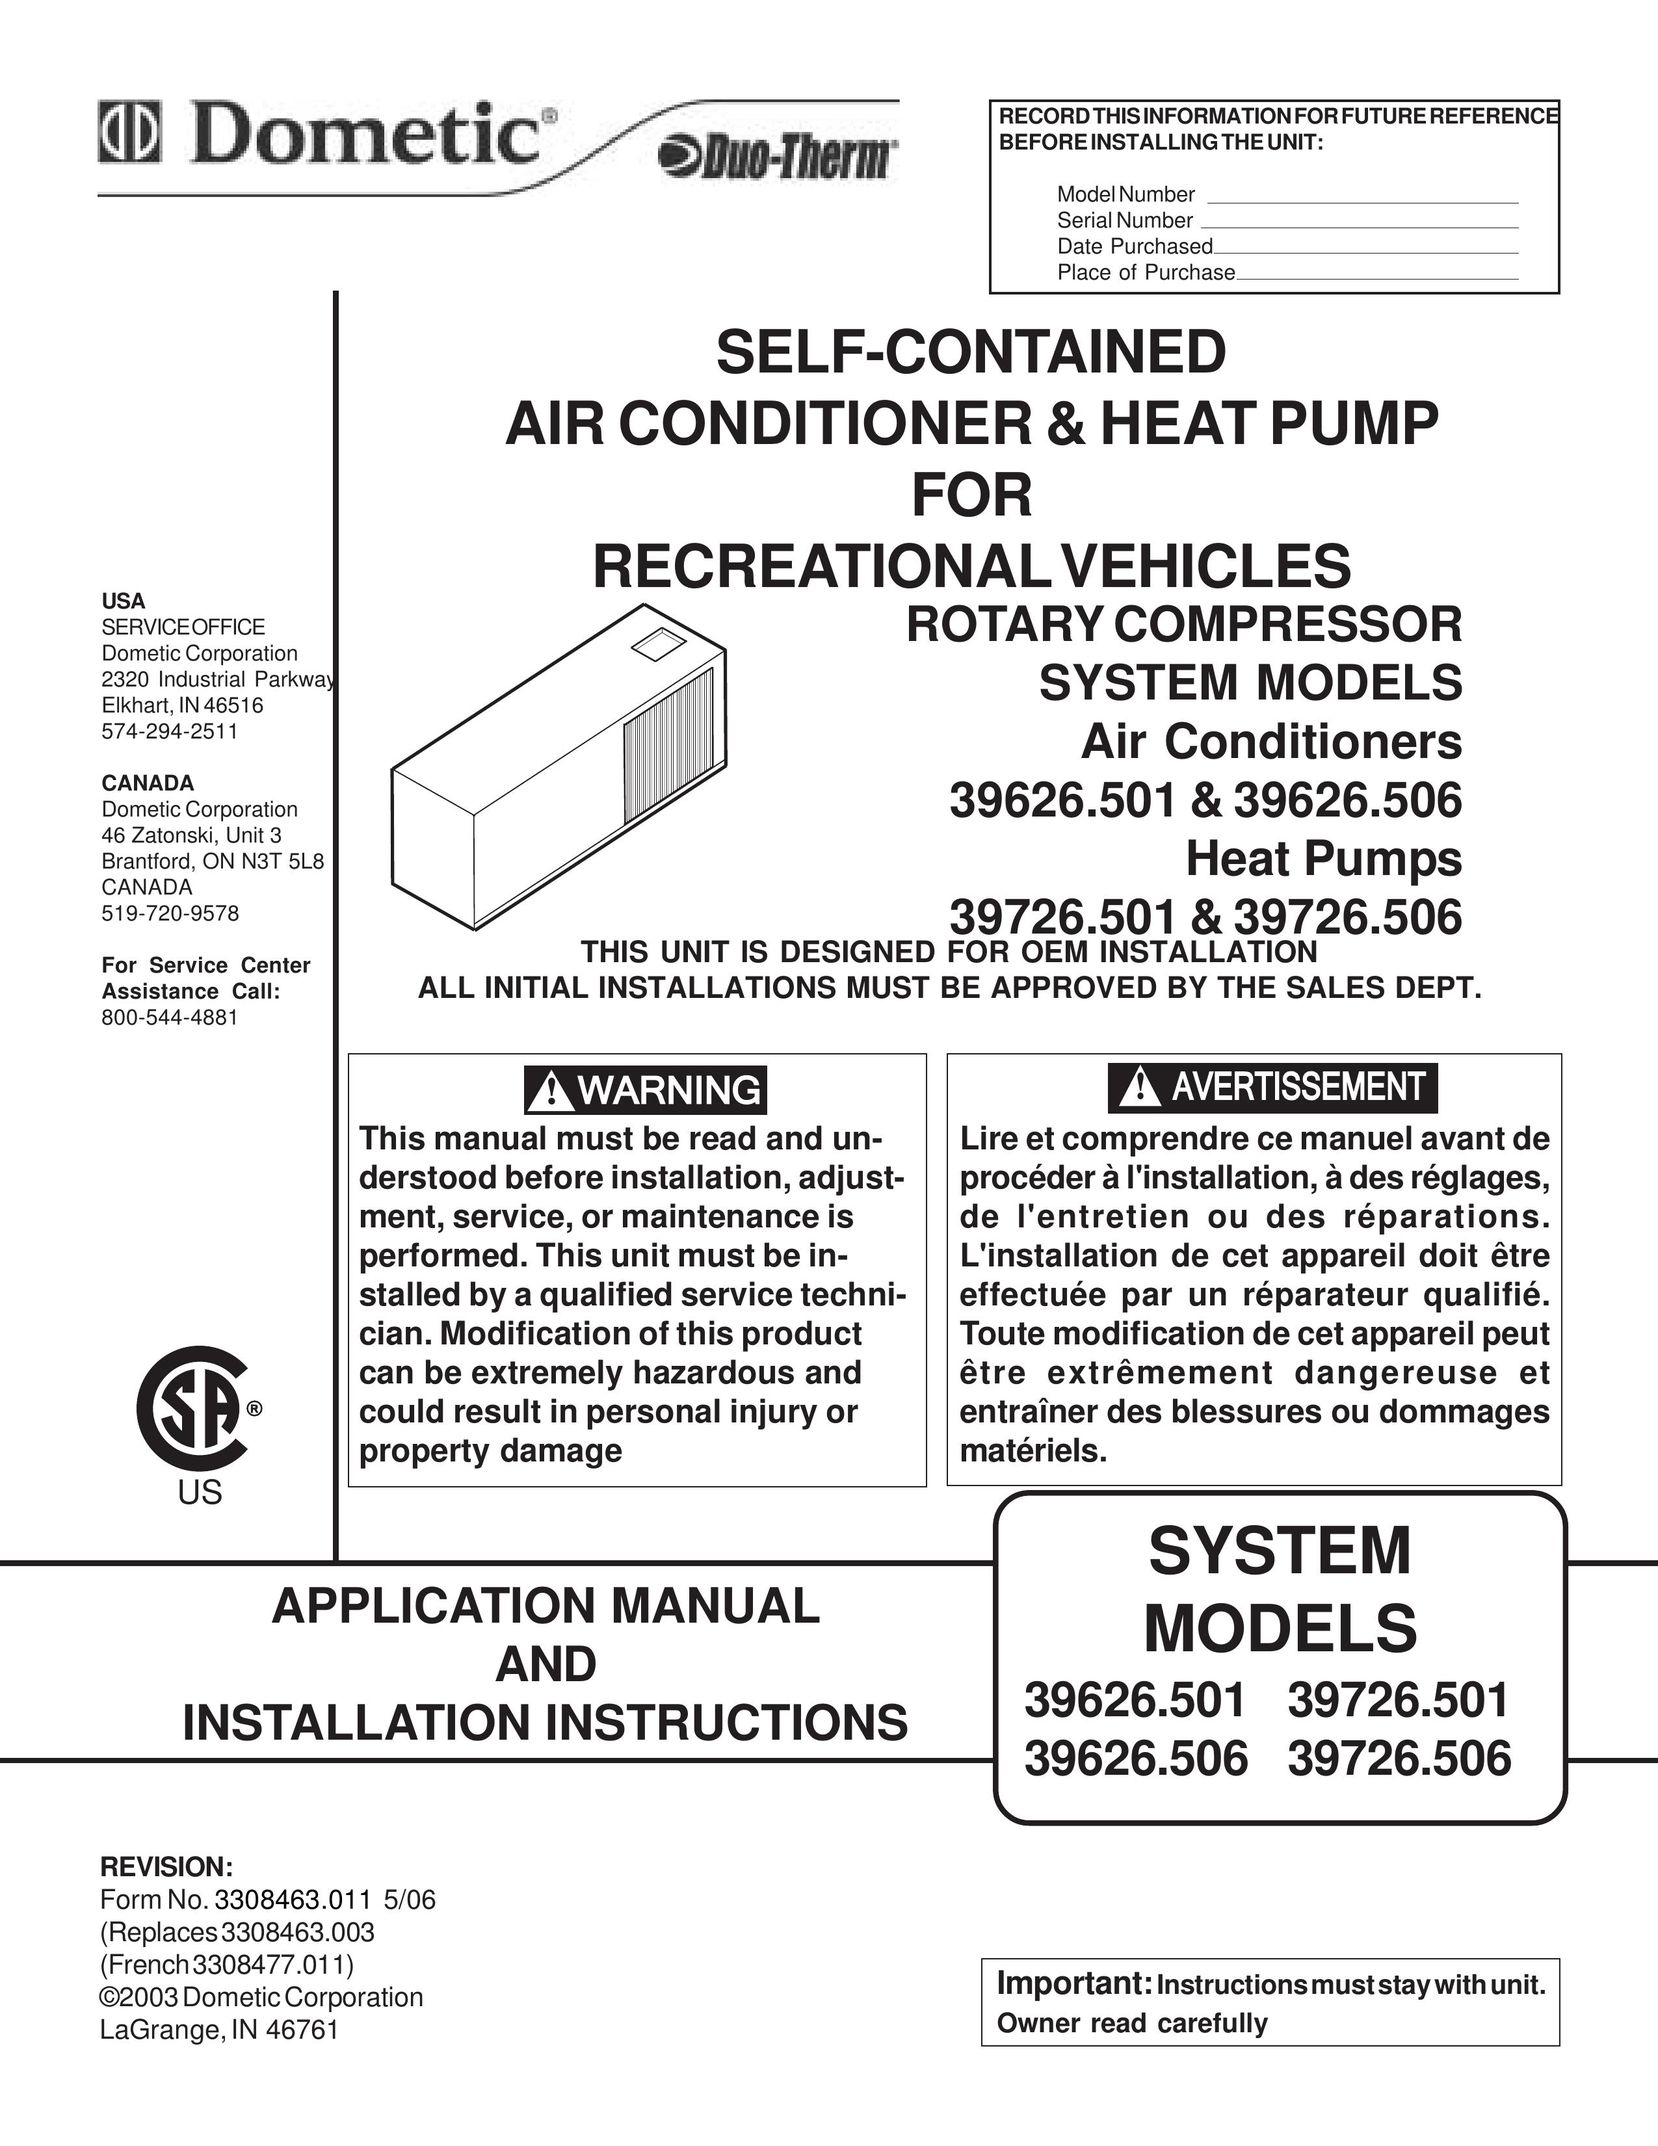 Dometic 39626.506 Air Conditioner User Manual